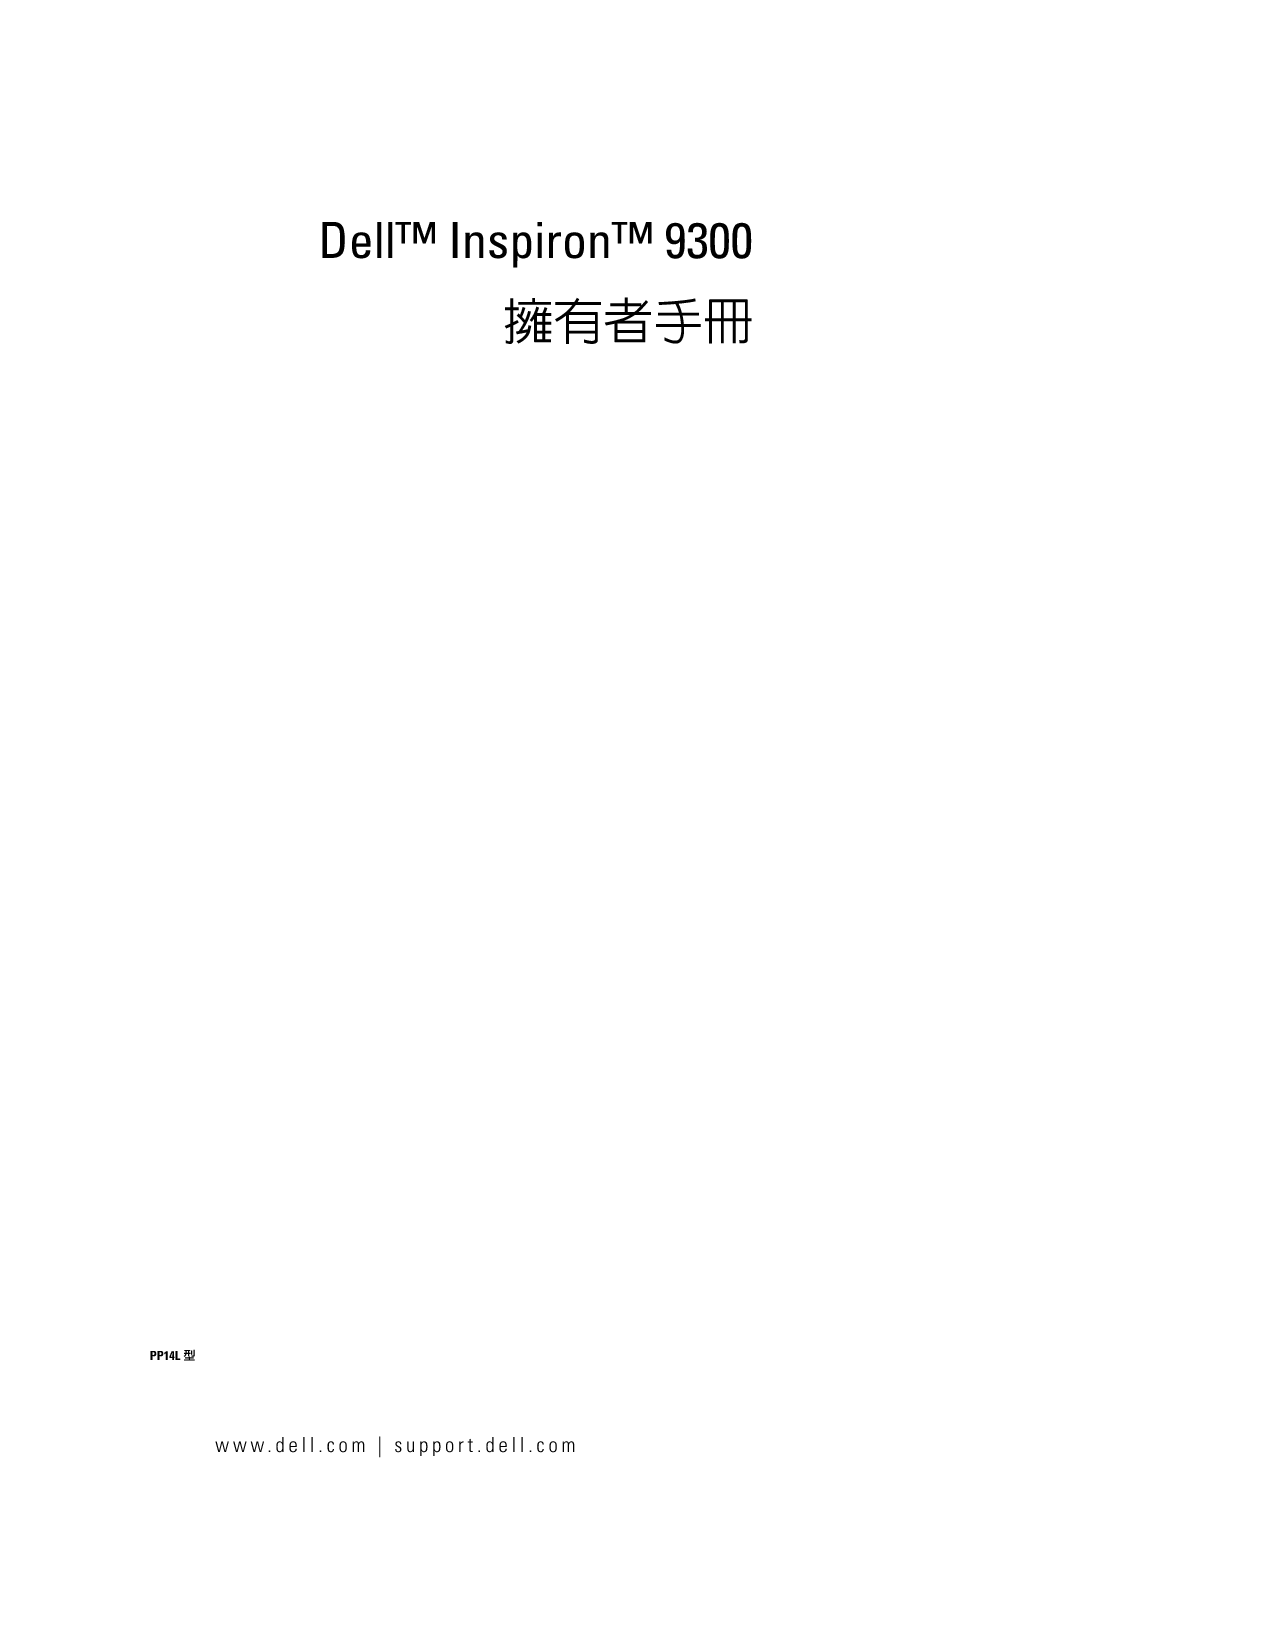 戴尔 Dell Inspiron 9300 繁体 用户手册 封面